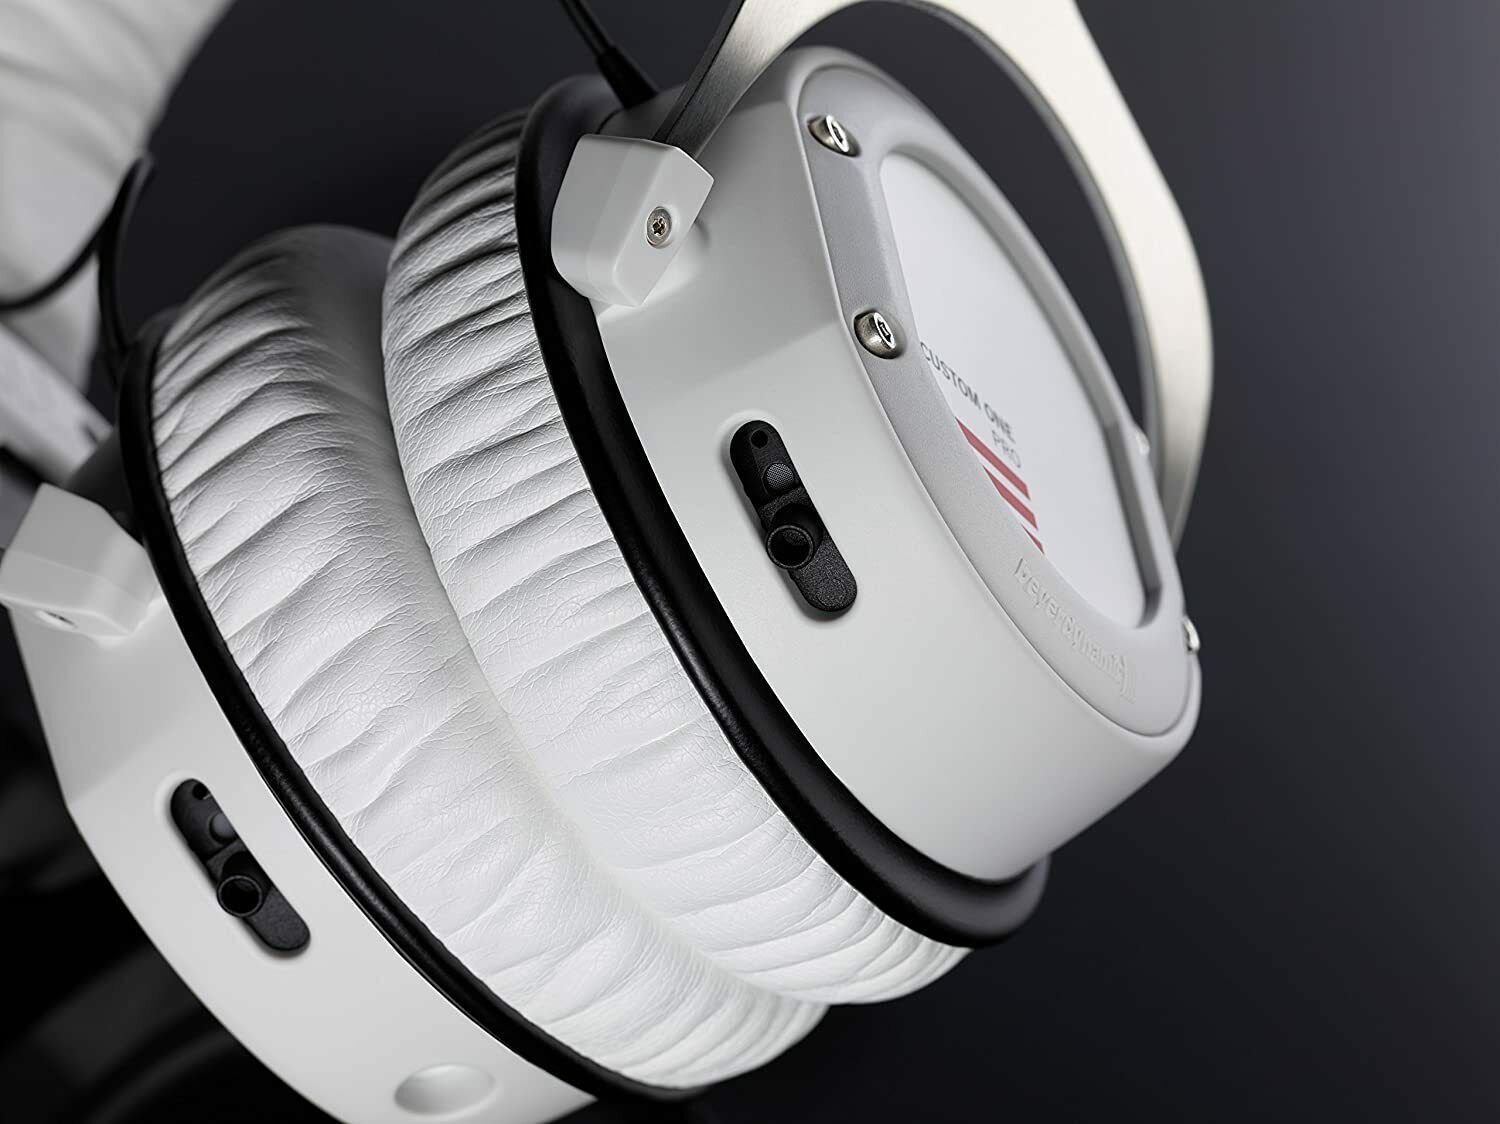 Beyerdynamic Custom One Pro Plus Headphone - White-New-9098